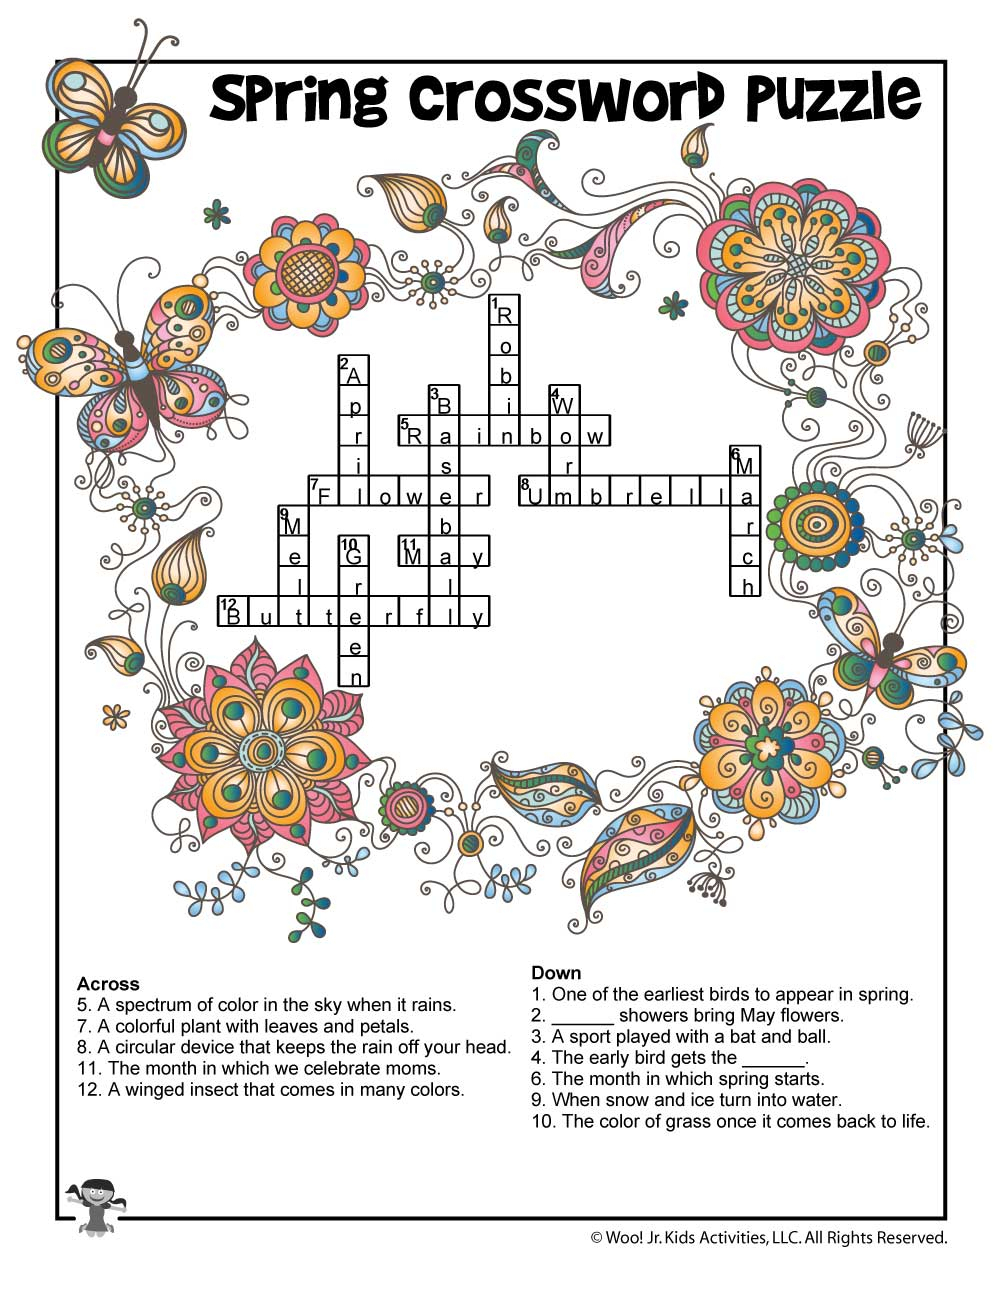 Spring Crossword Puzzle For Kids - Answer Key | Woo! Jr. Kids Activities - Printable Crossword Spring